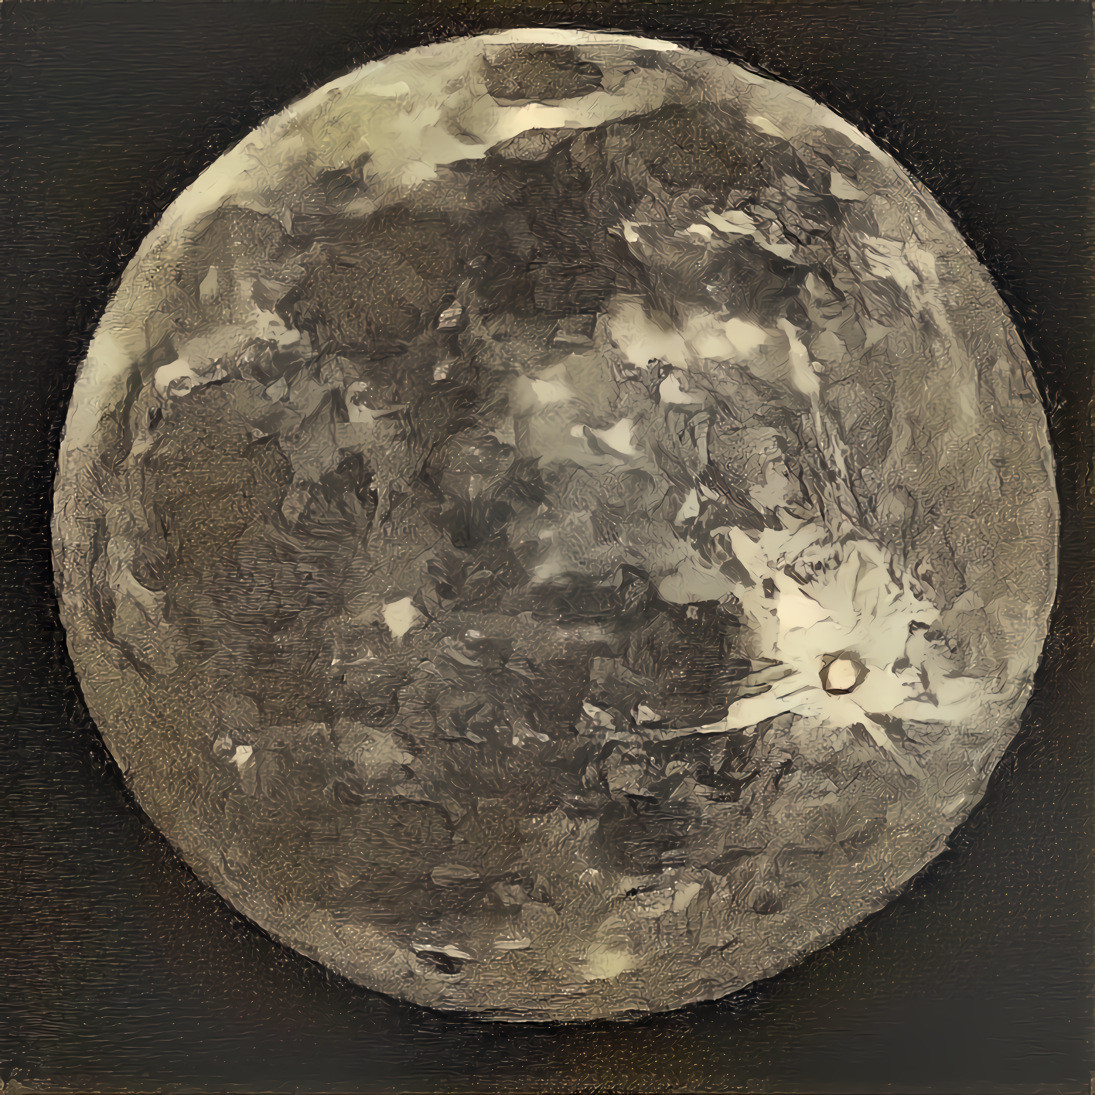 Goya's Moon